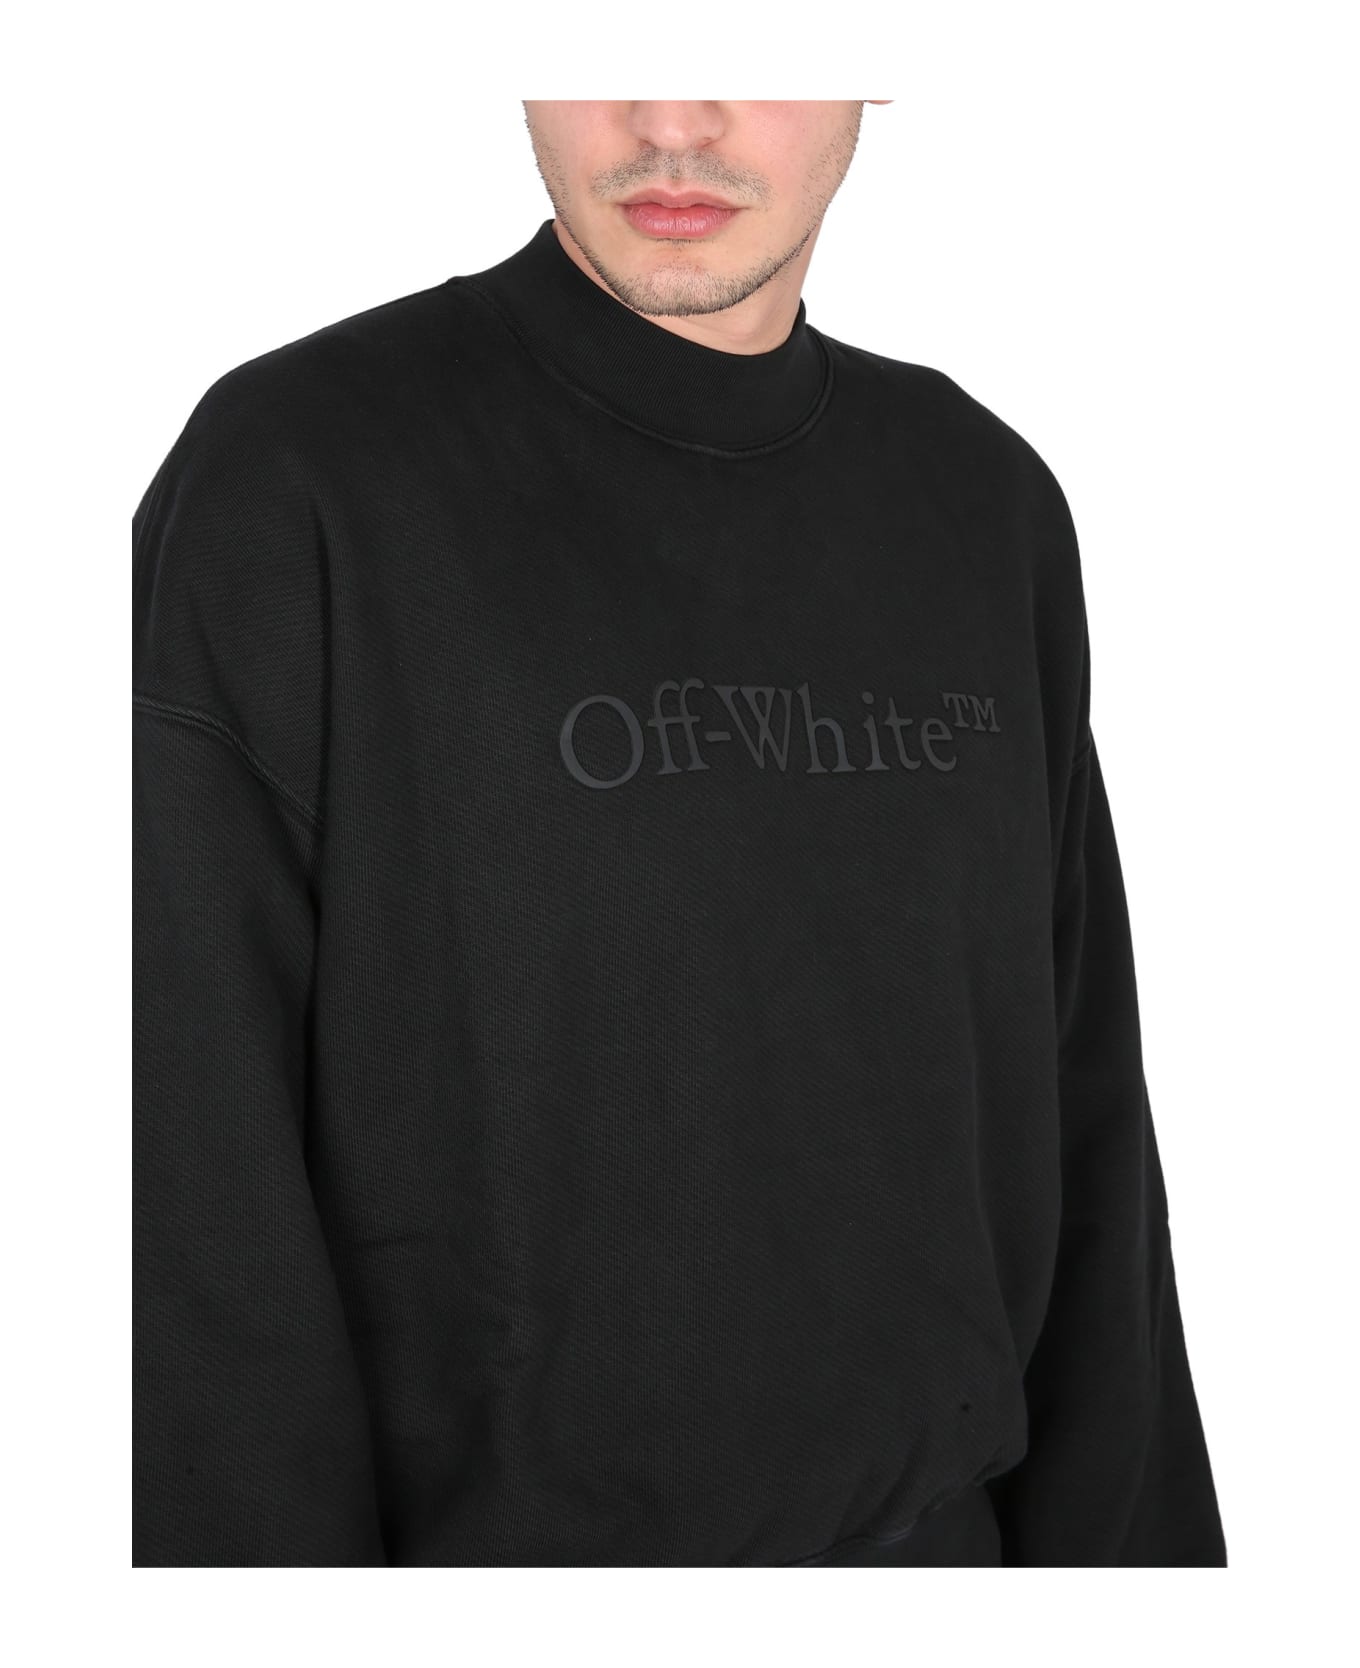 Off-White Sweatshirt With Logo - Black